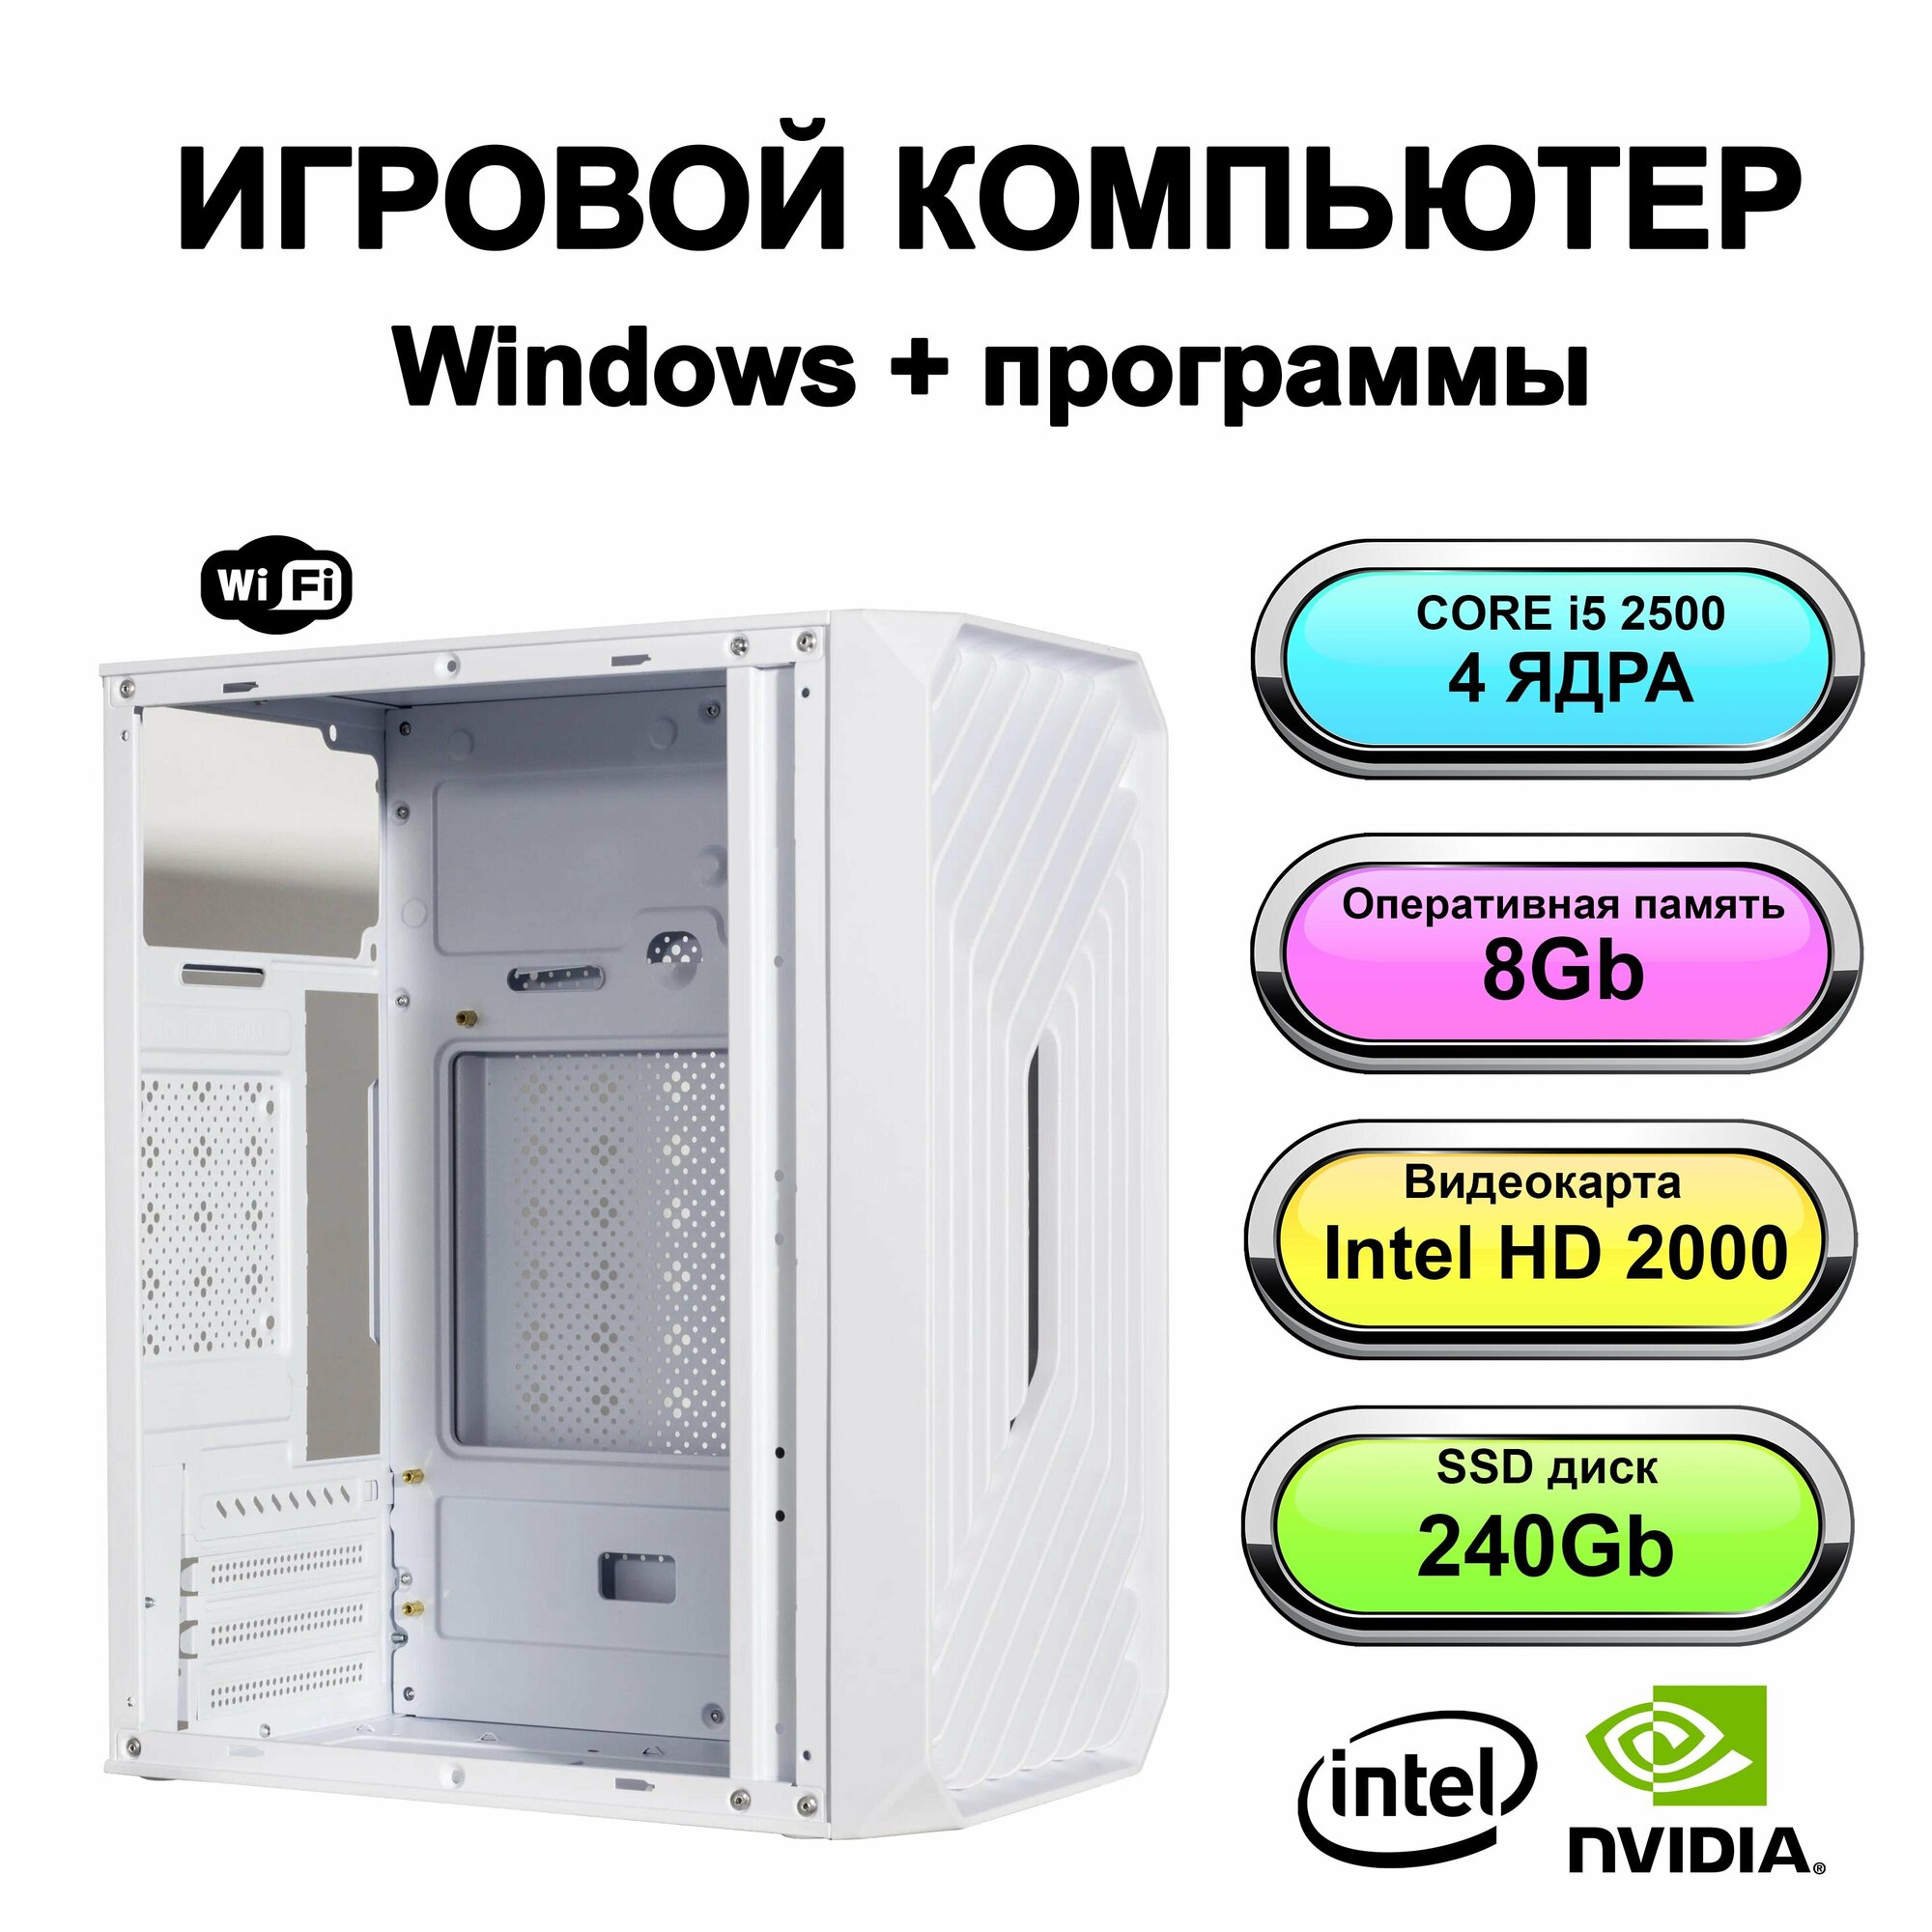 Системный блок Power PC компьютер для дома (Intel Core i5-2500 (3.3 ГГц), RAM 8 ГБ, SSD 240 ГБ, Intel HD Graphics 2000, Windows 10 Pro